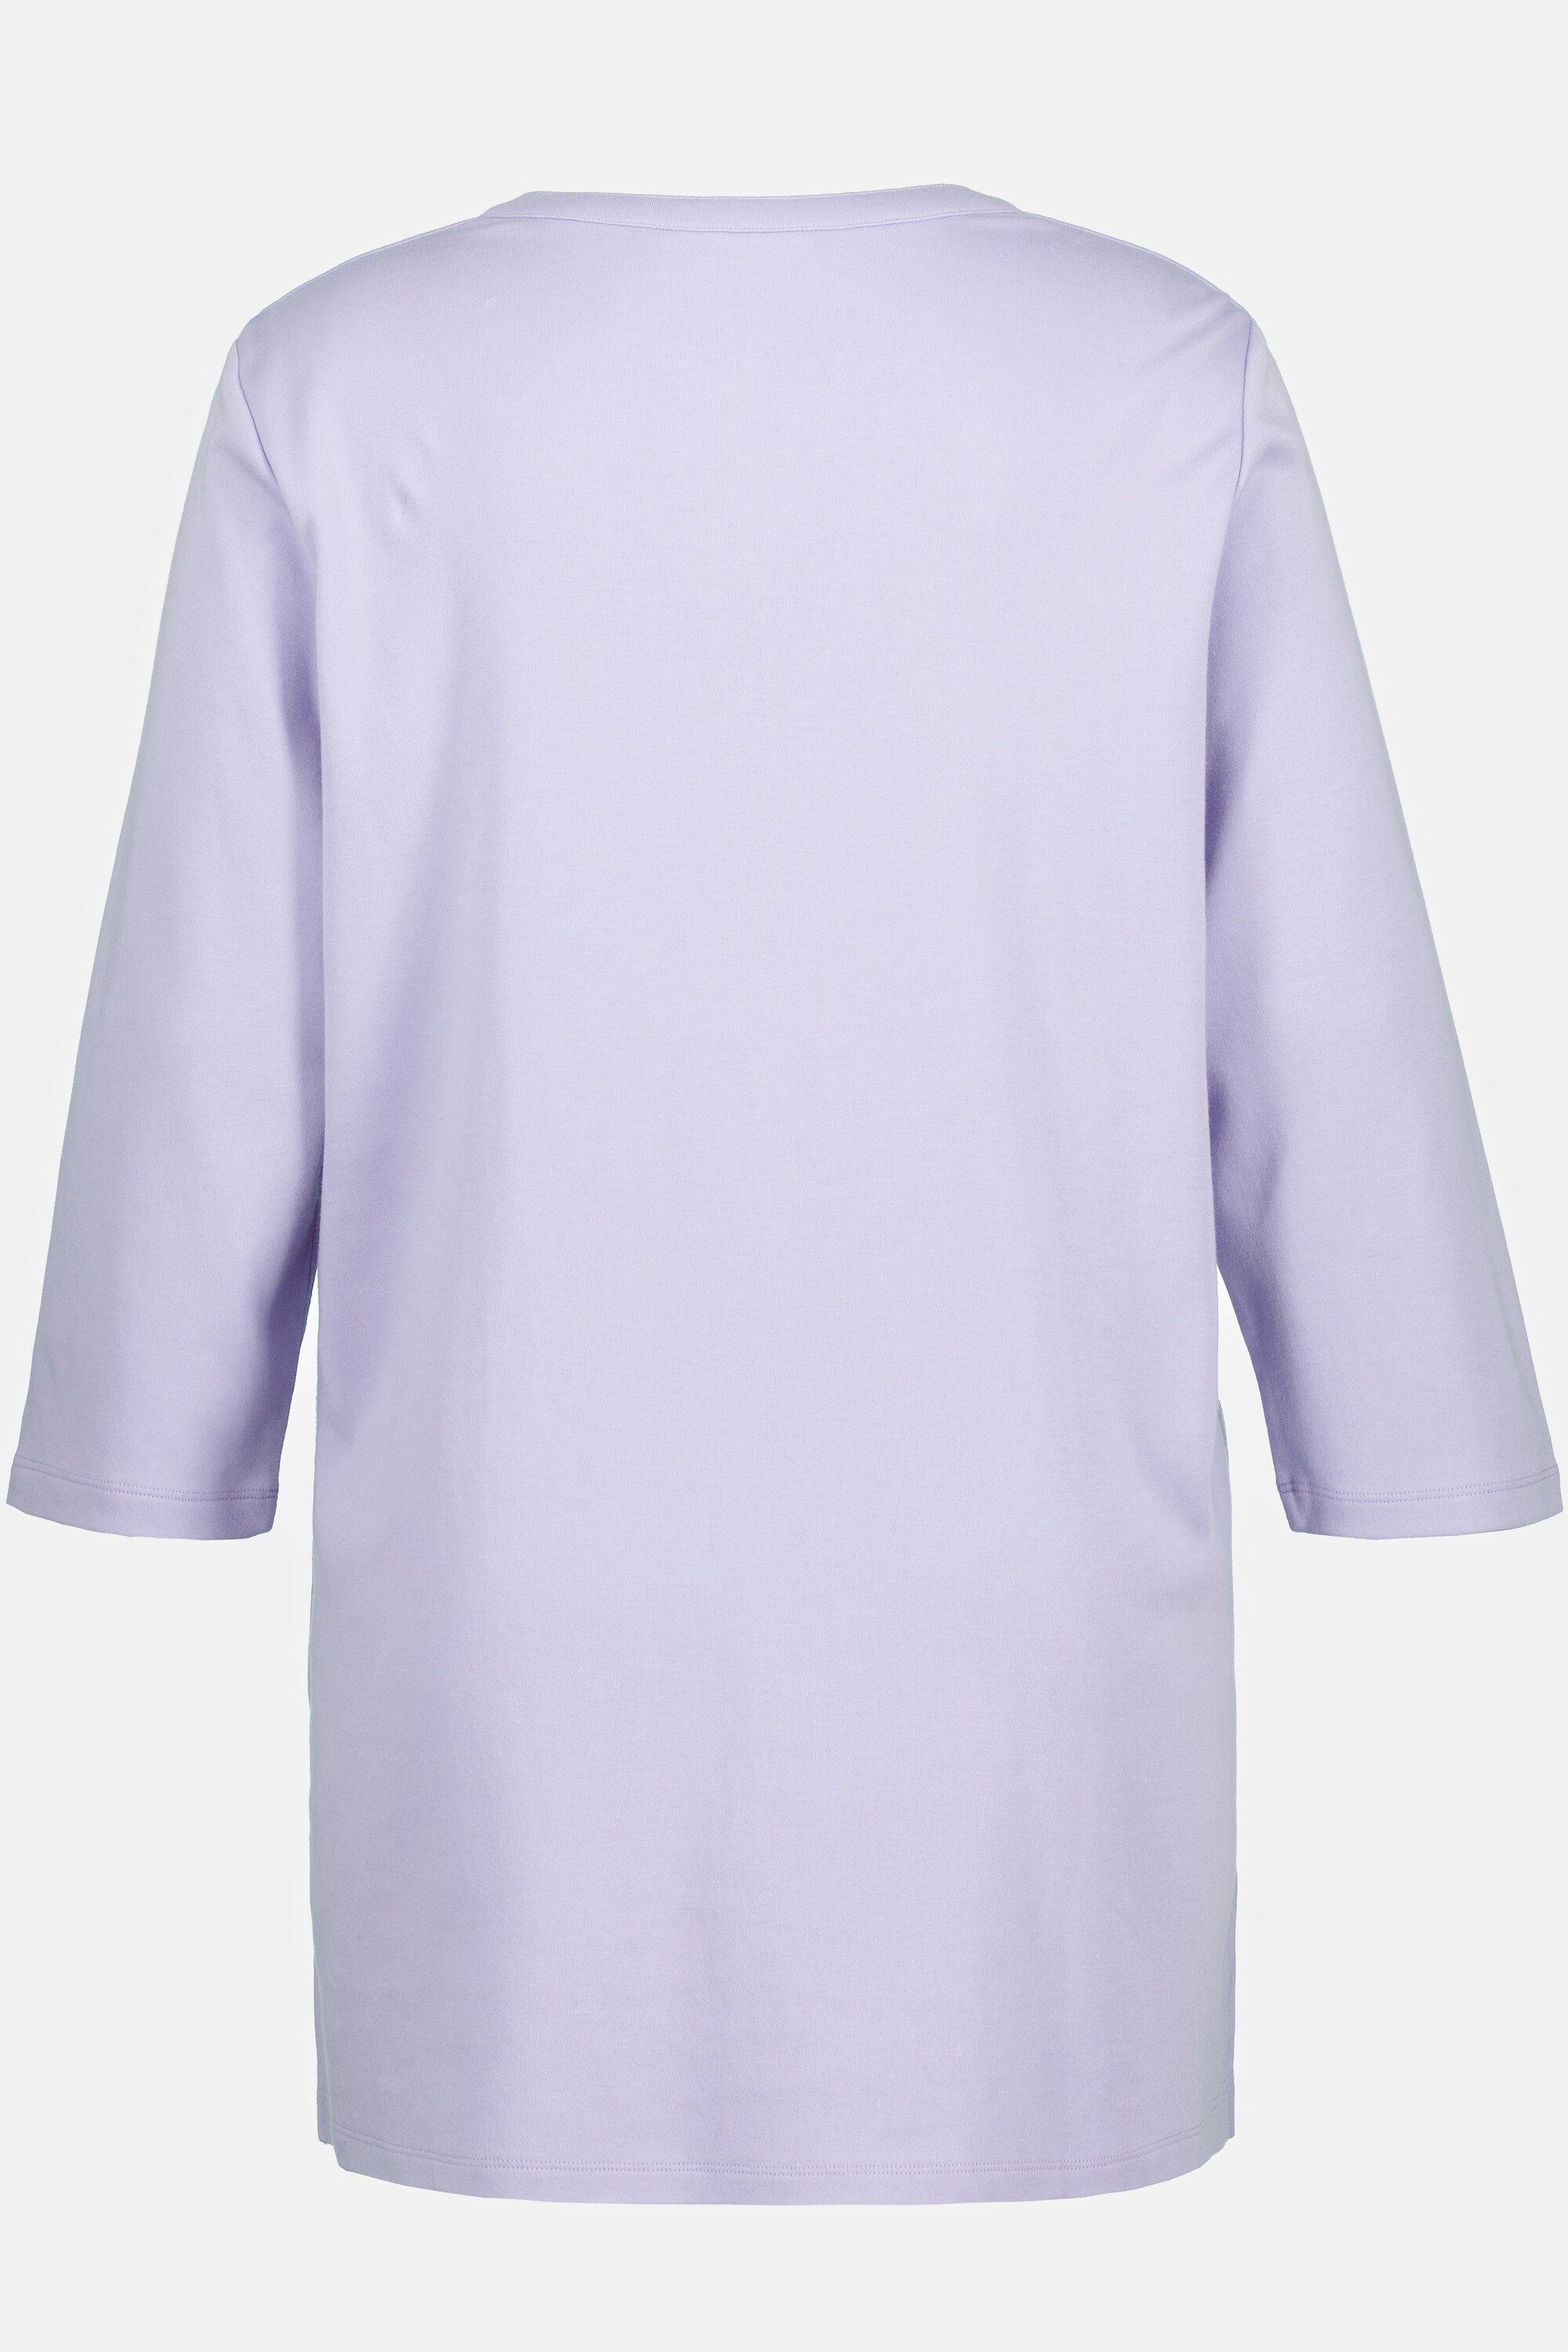 Shirt Tunika-Ausschnitt Schmuckknopf Ulla Rundhalsshirt Modal A-Line lavendel Popken